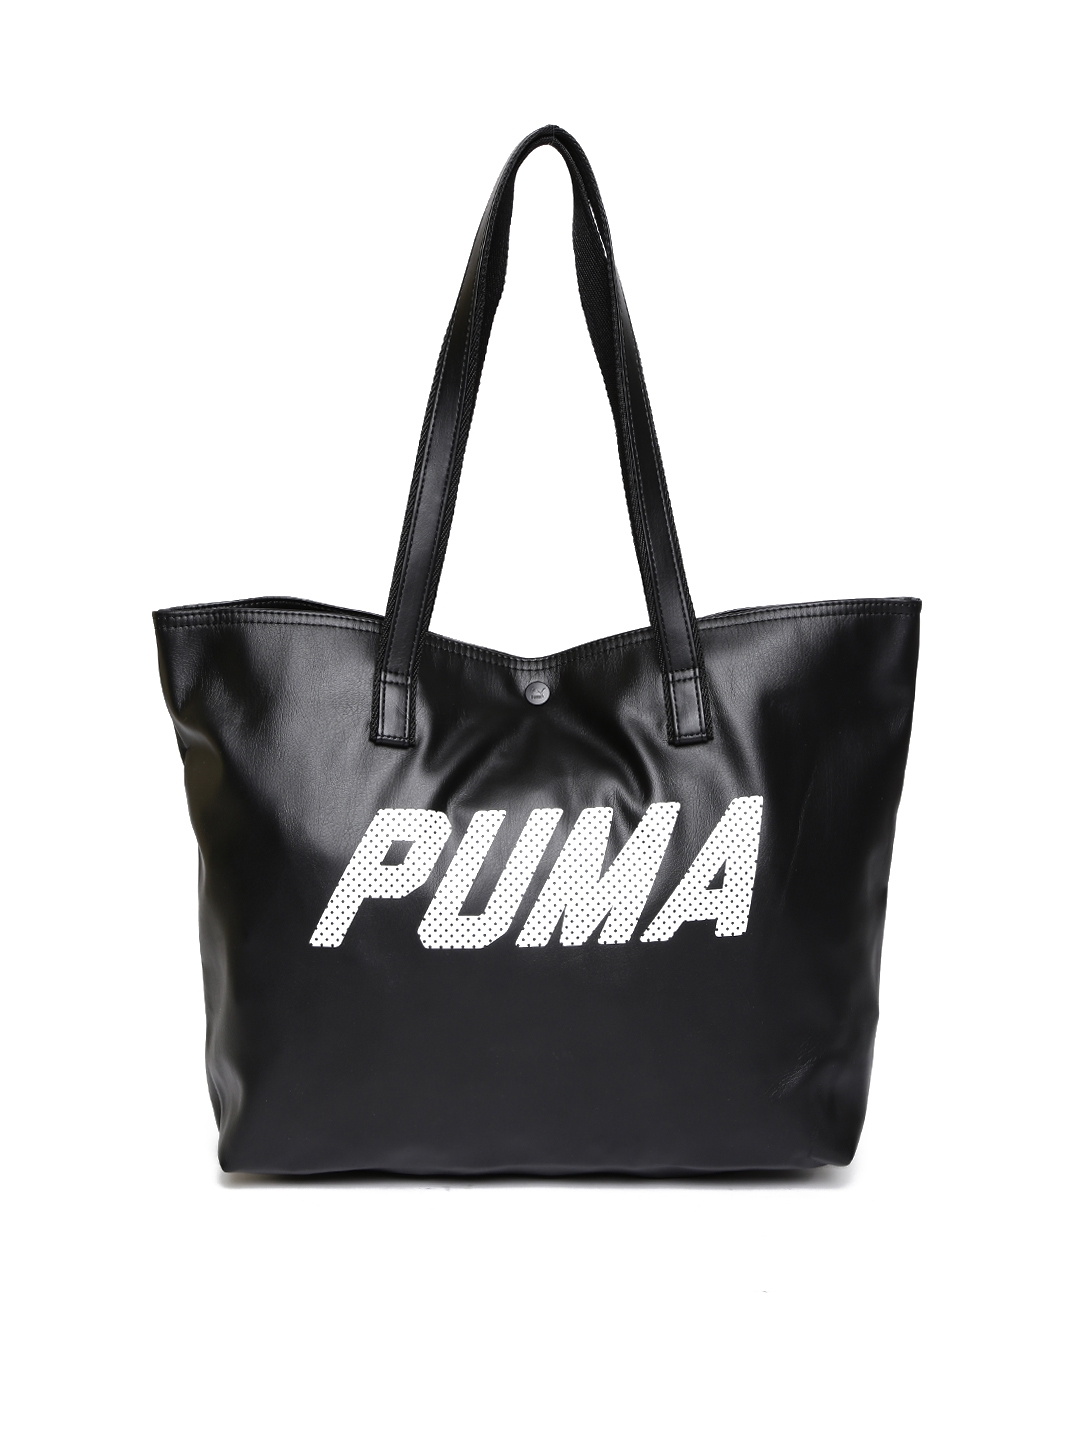 puma sling bags online india